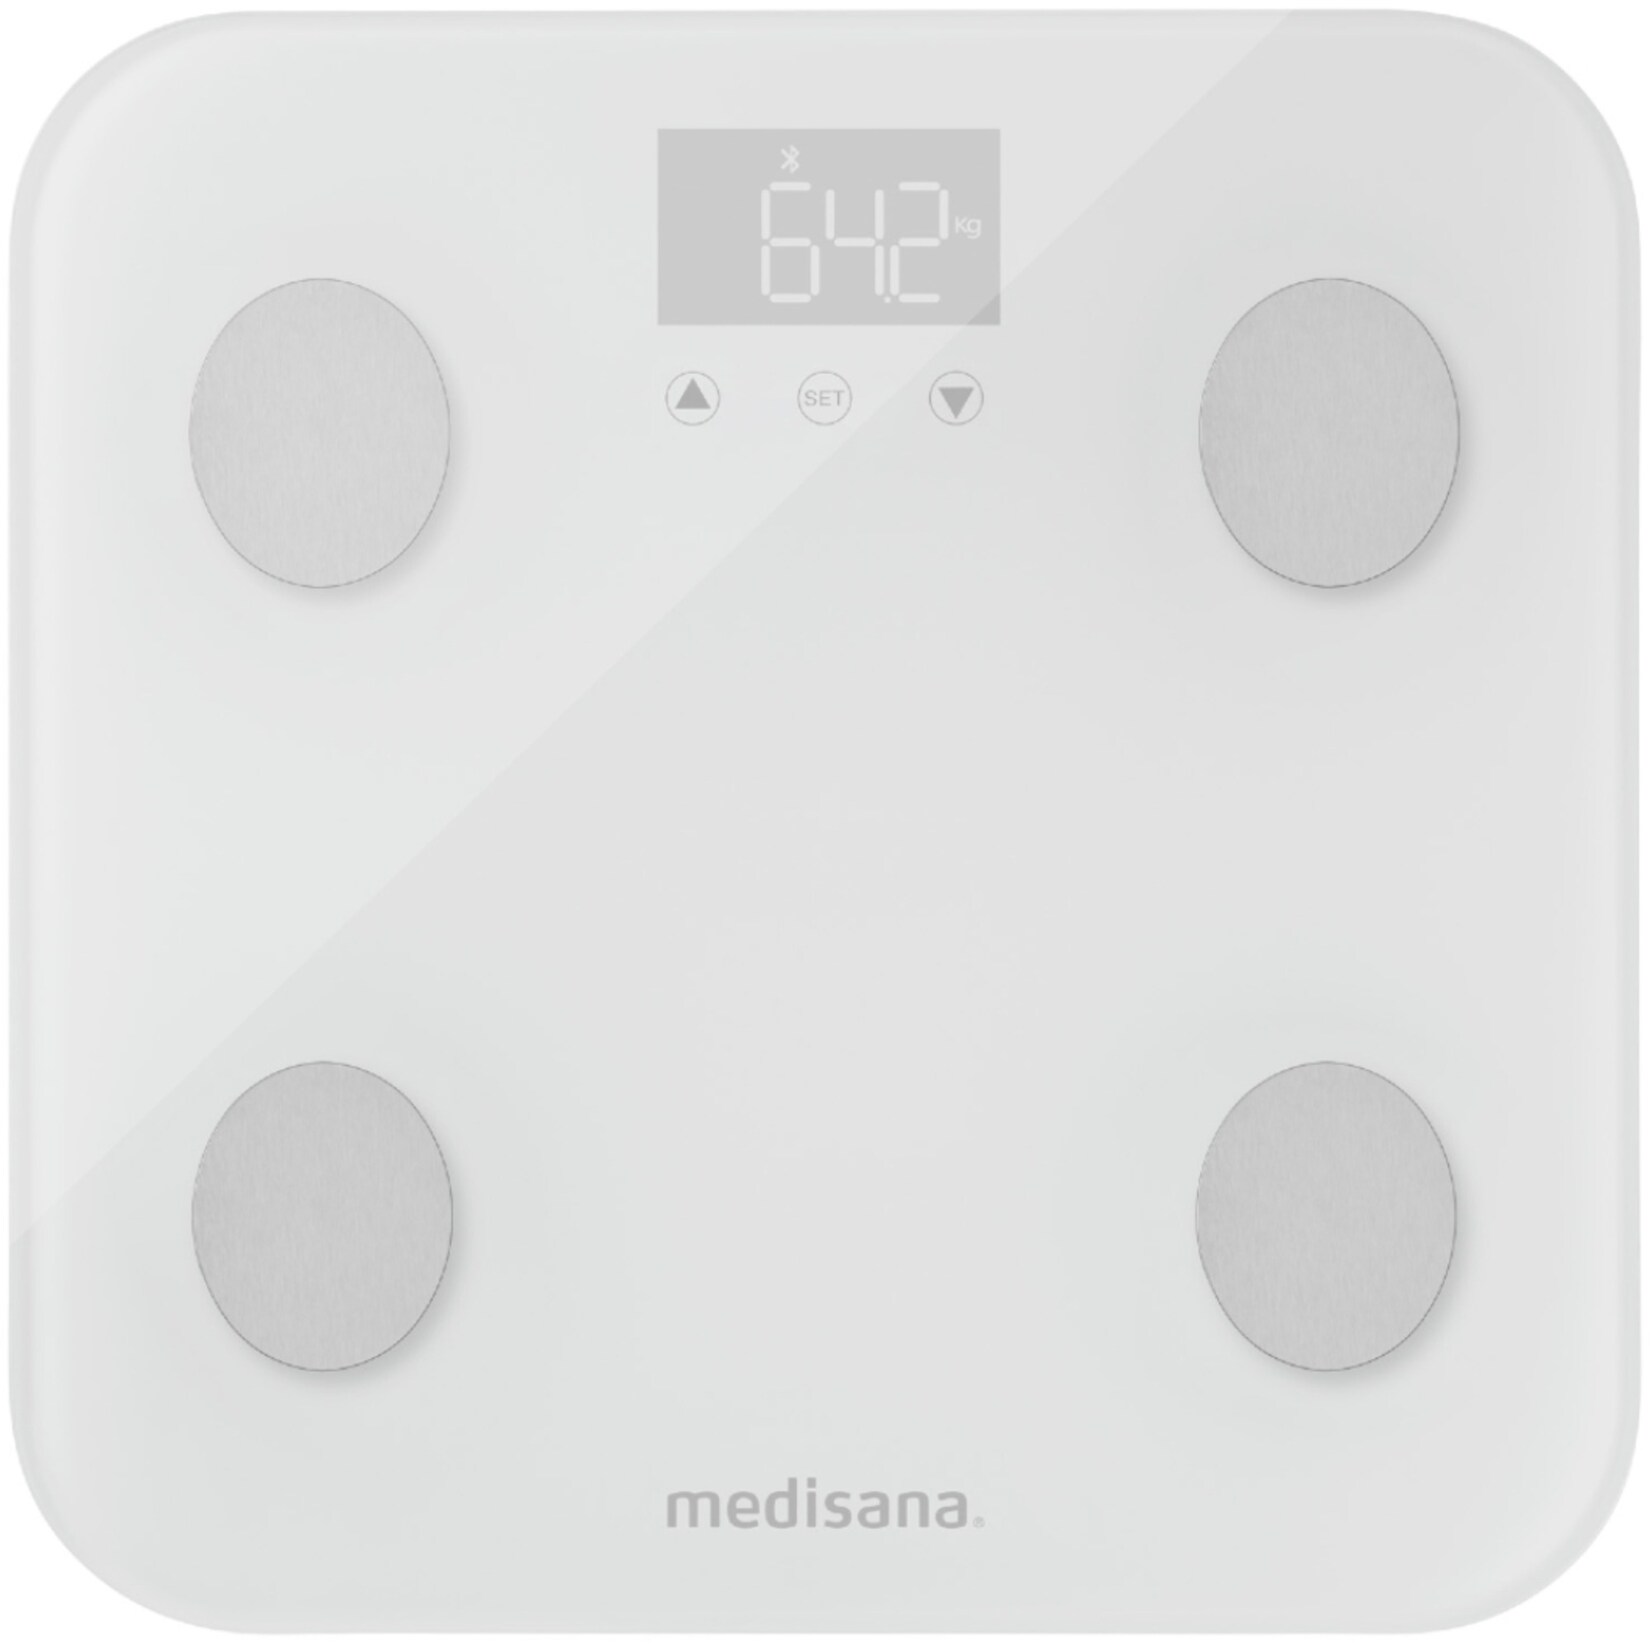 Medisana Waage connect WiFi & Bluetooth Körperanalysewaage BS 600